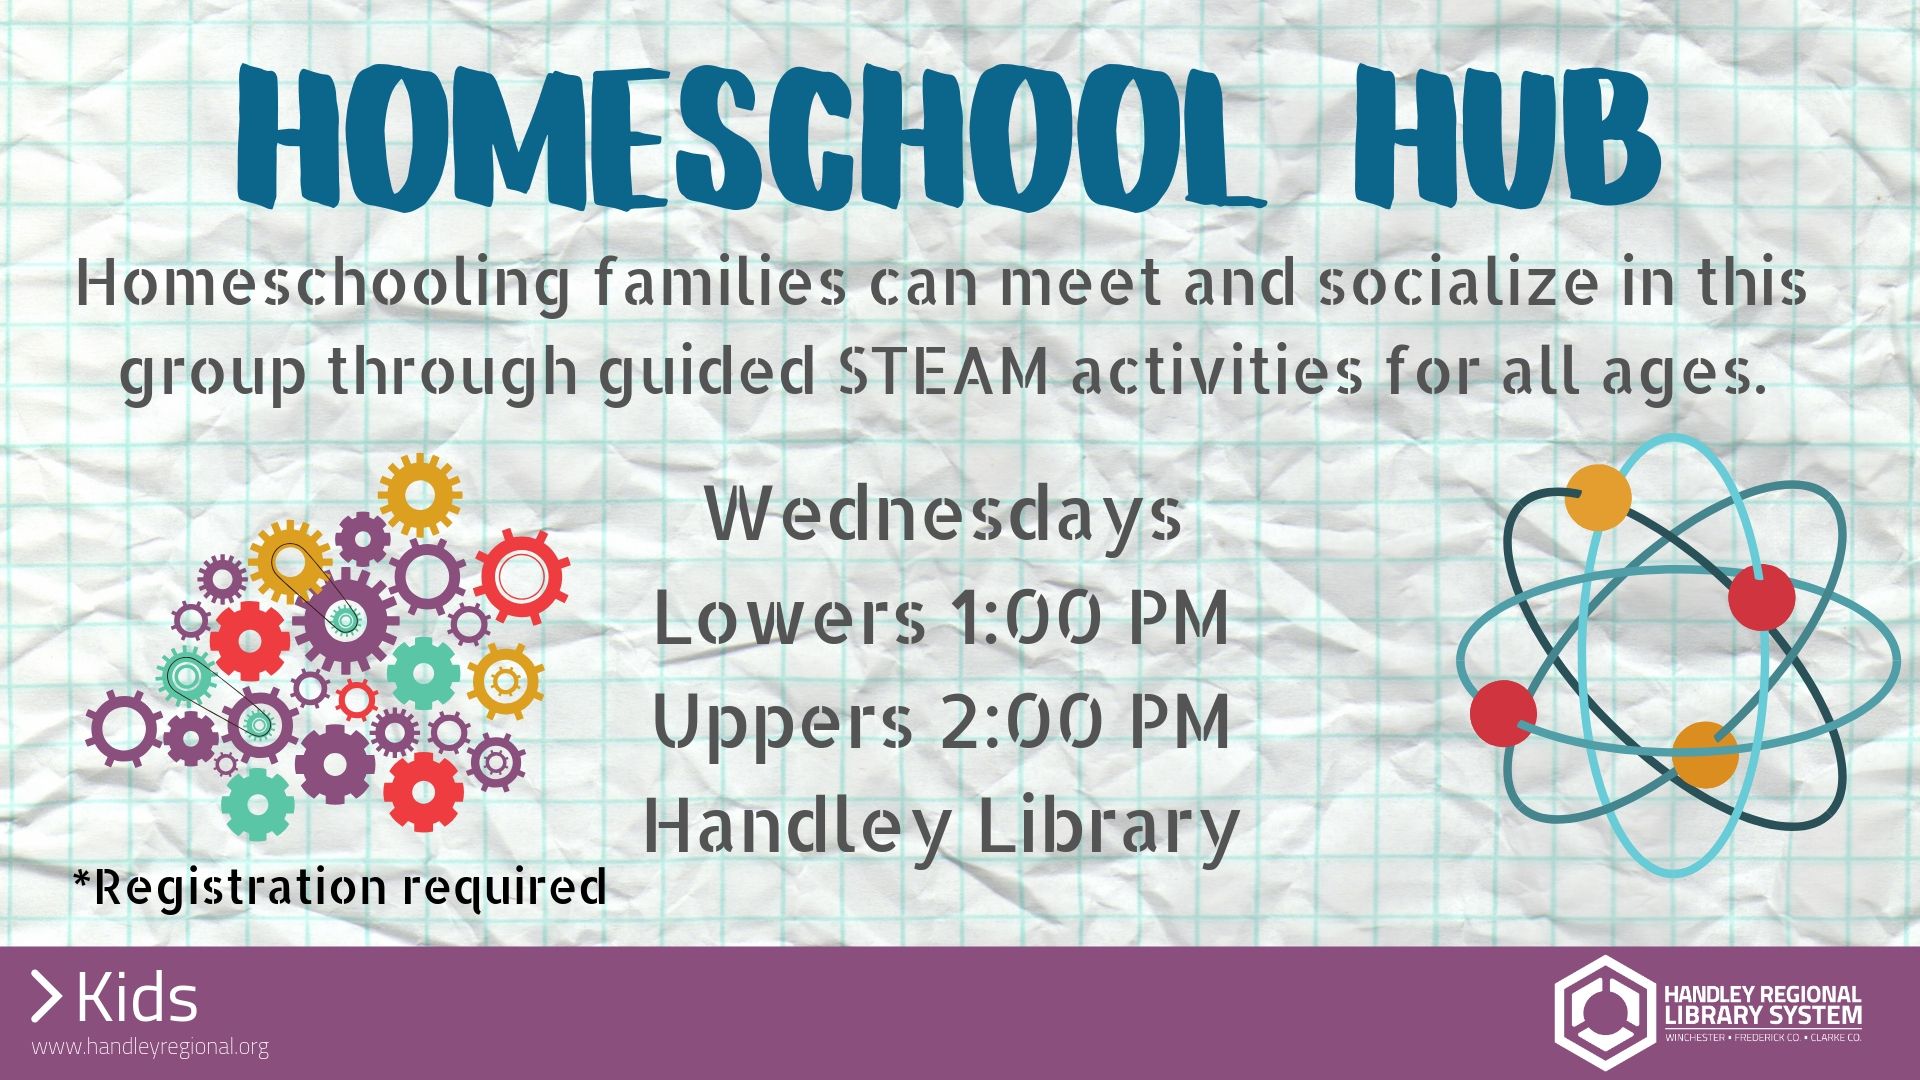 atoms spinning around with homeschool hub event info